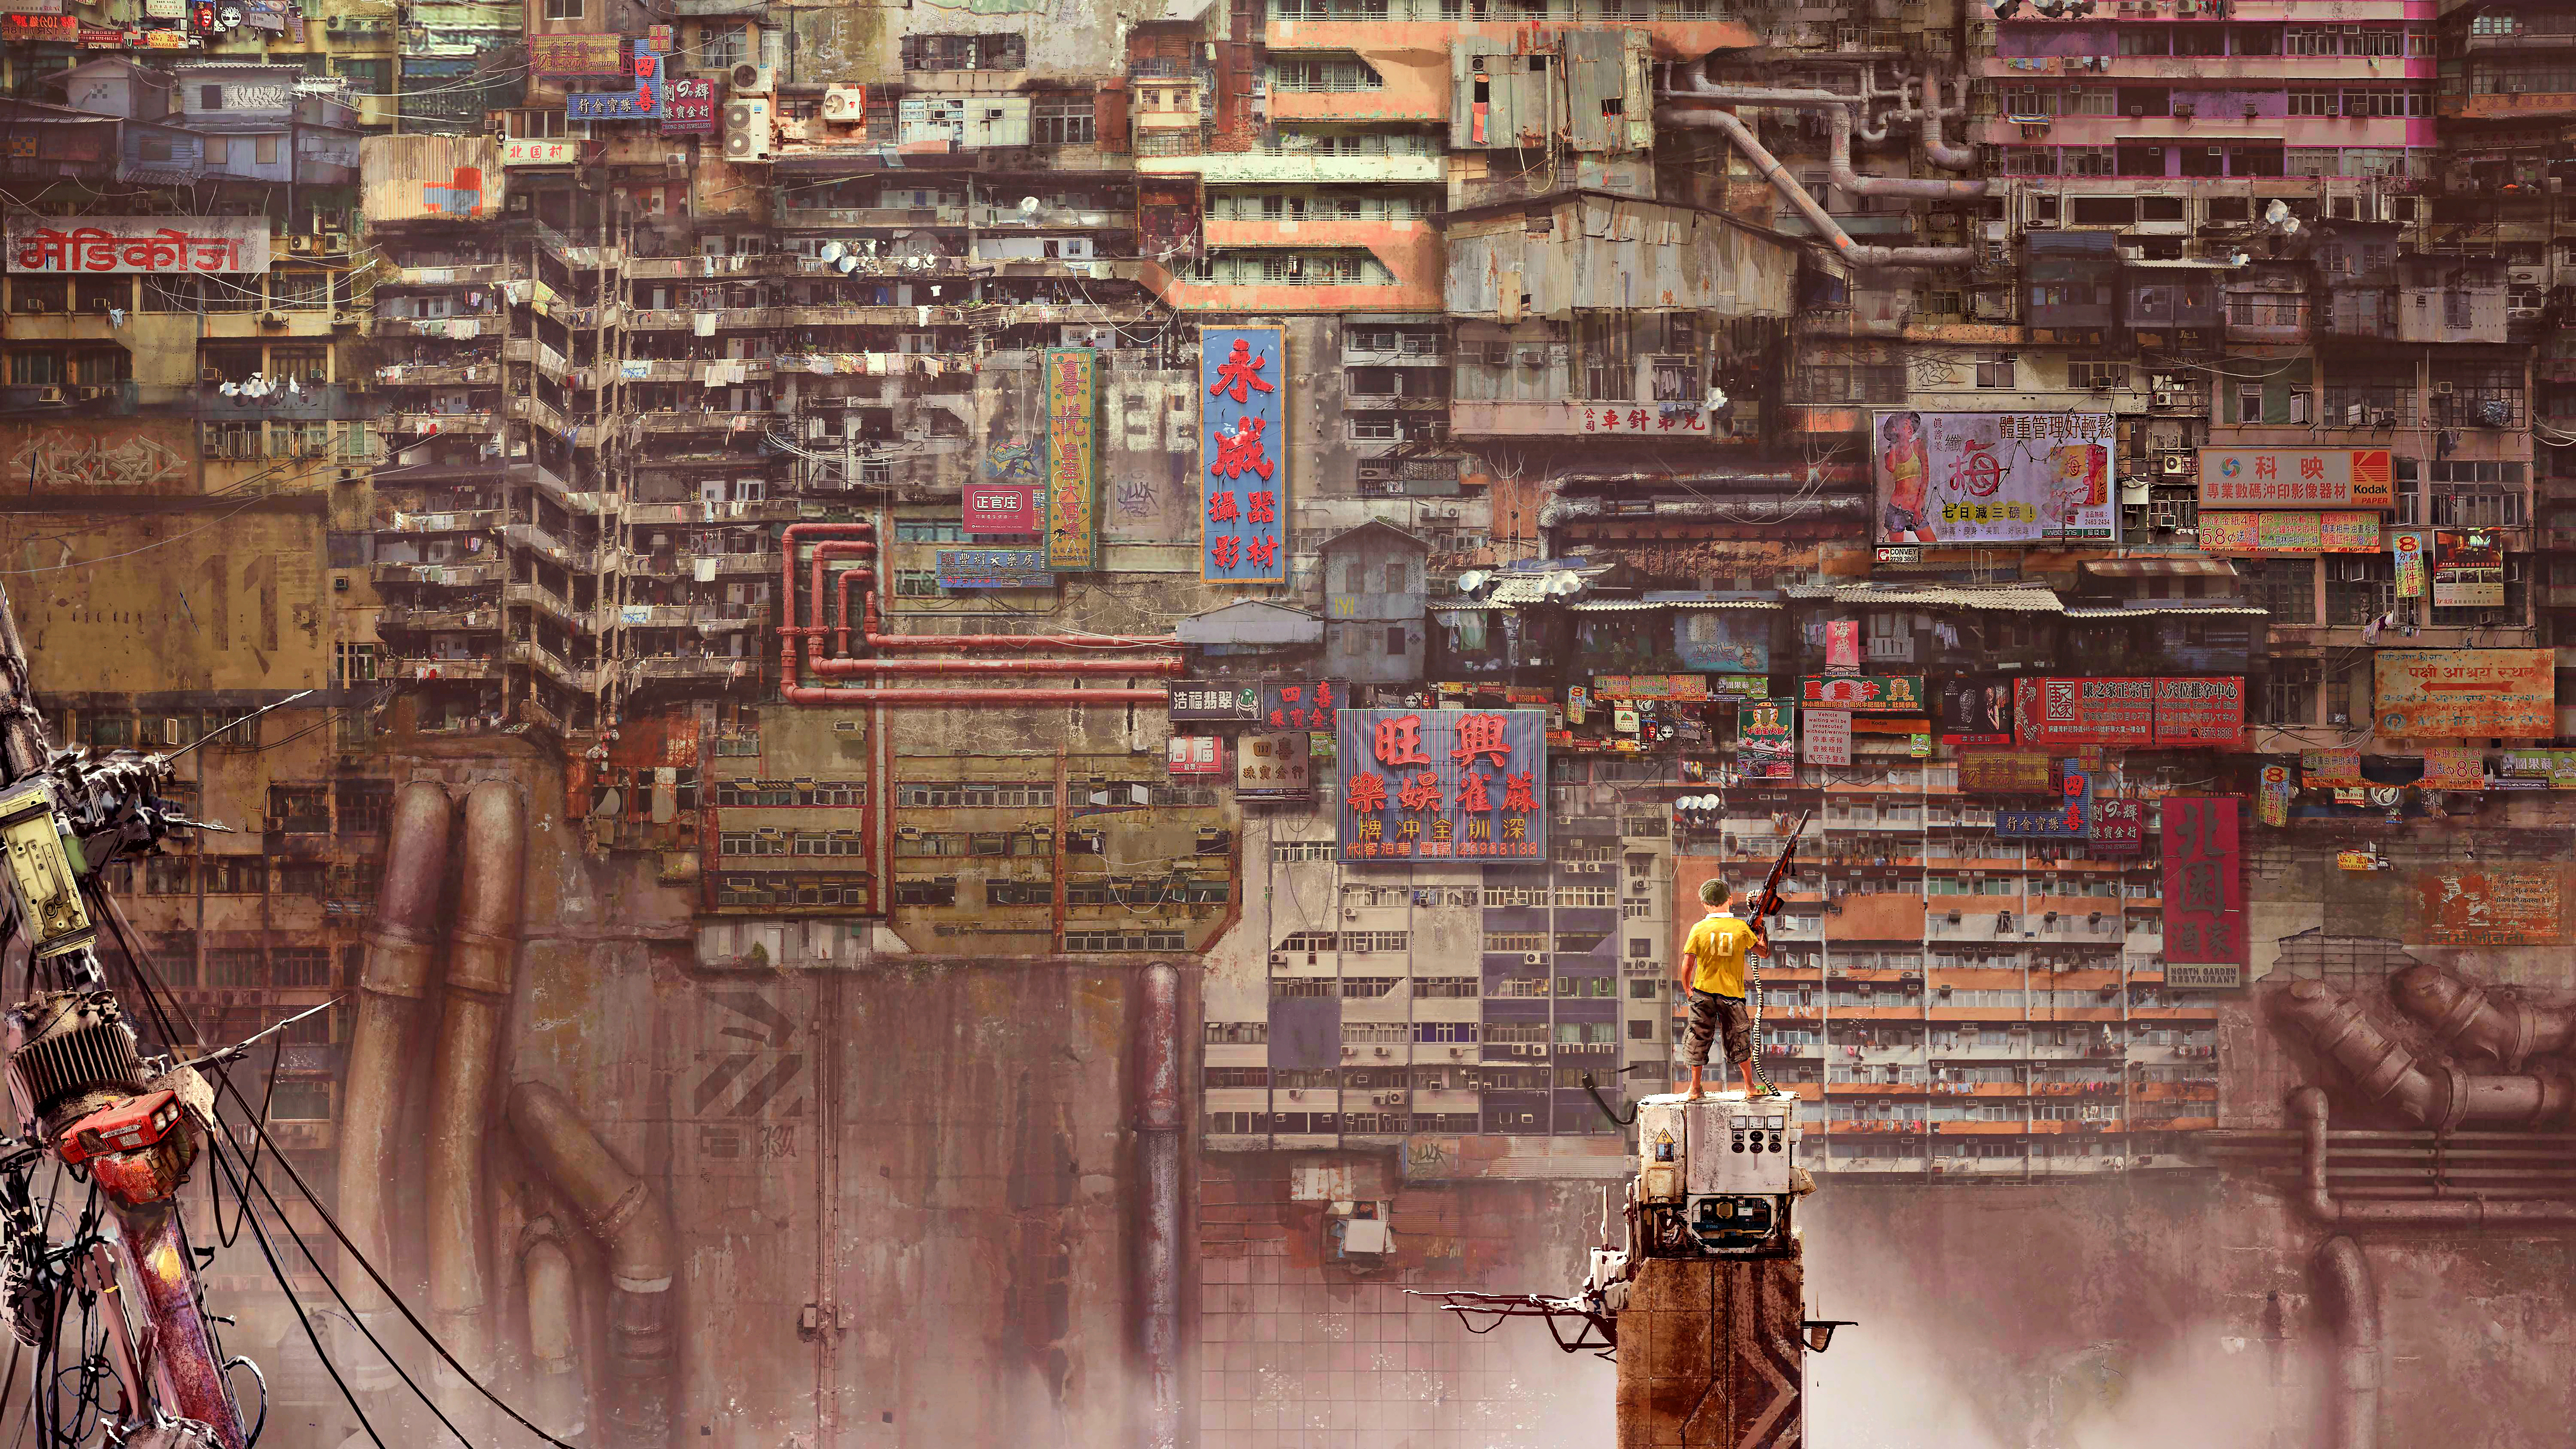 General 5120x2880 futuristic city futuristic science fiction digital art concept art artwork fan art CGI cyberpunk cyber city cityscape urban apocalyptic Kuldar Leement building block of flats Hong Kong Kowloon (City)